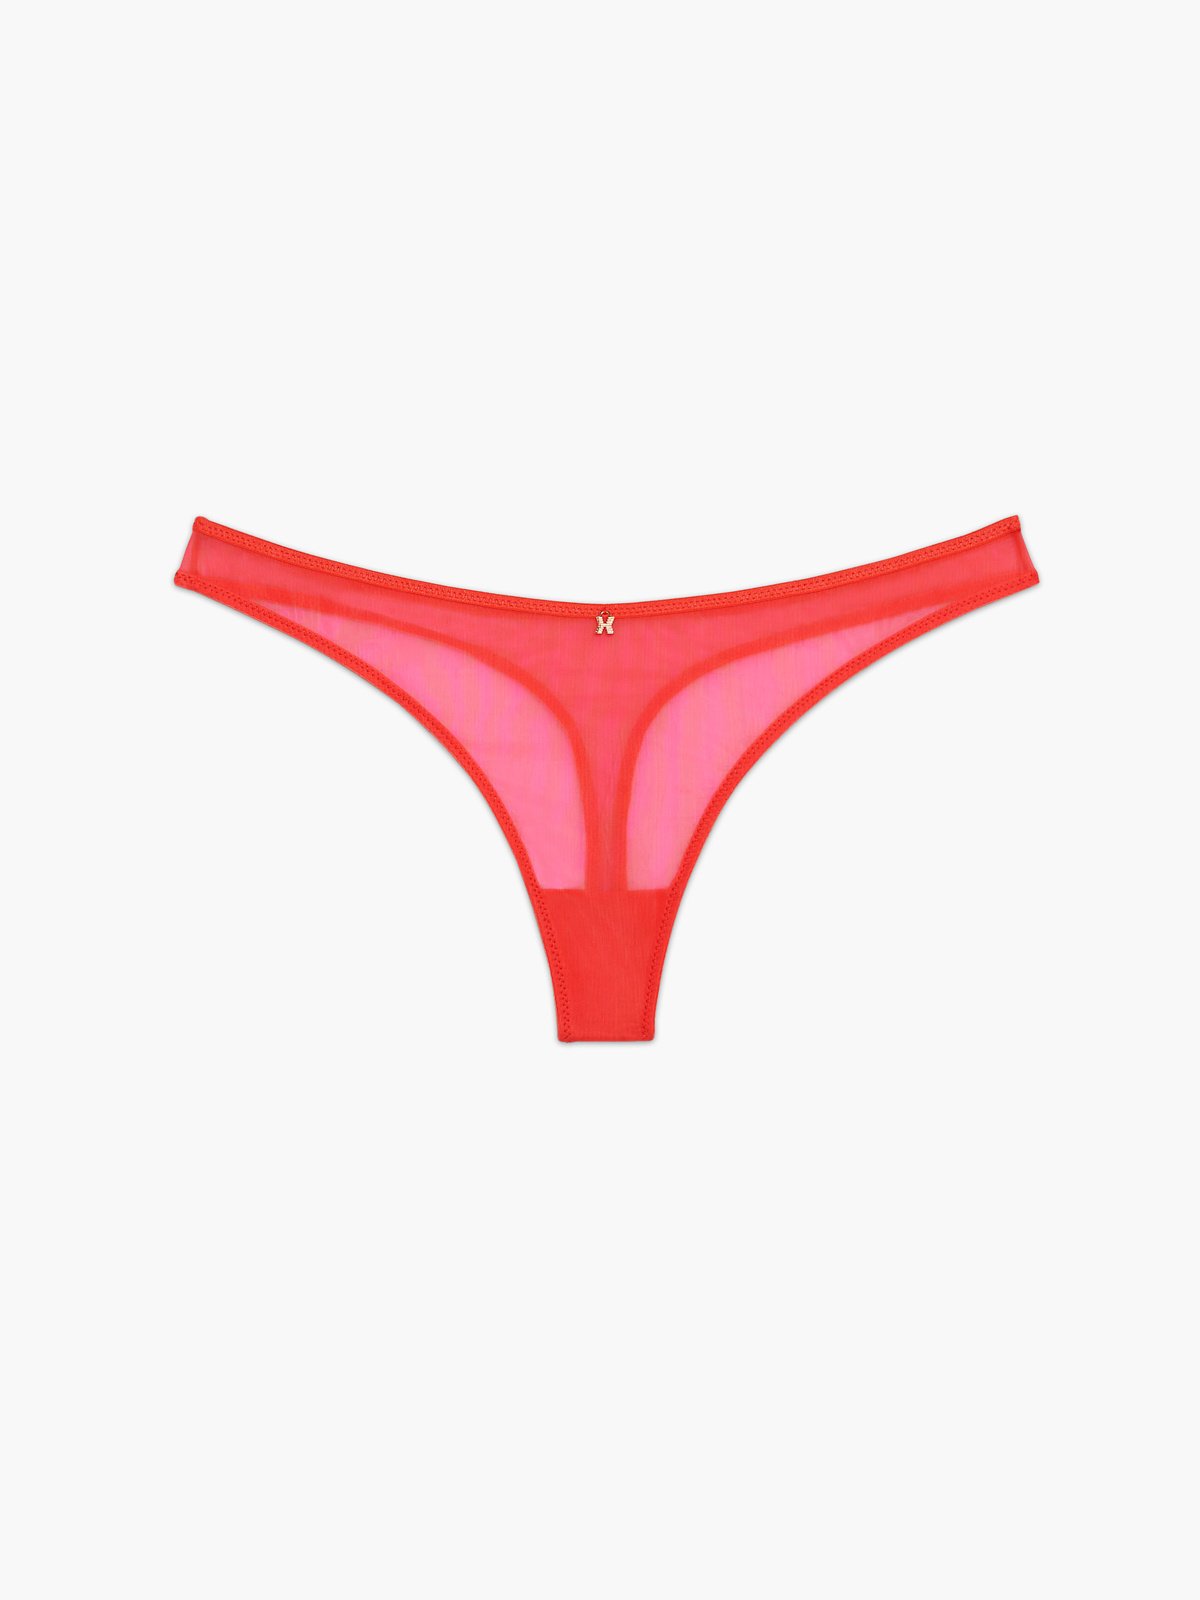 Sheer X Thong Panty in Pink & Red